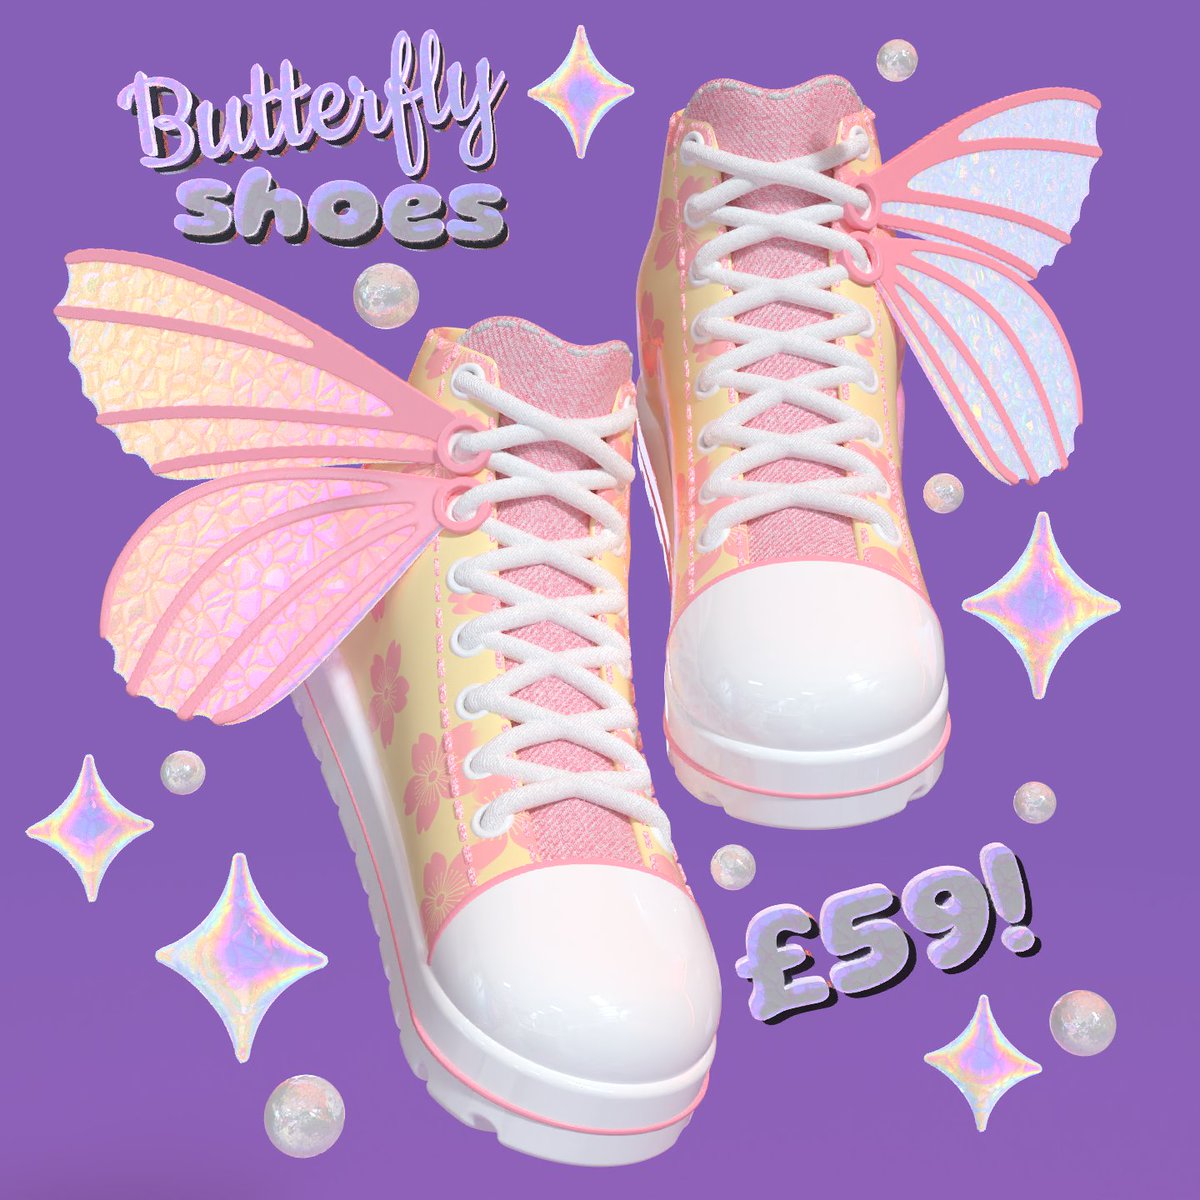 Butterfly Shoes for @womp3D's current mini challenge 🦋 ✨ 

#womp3D #art #3Dart